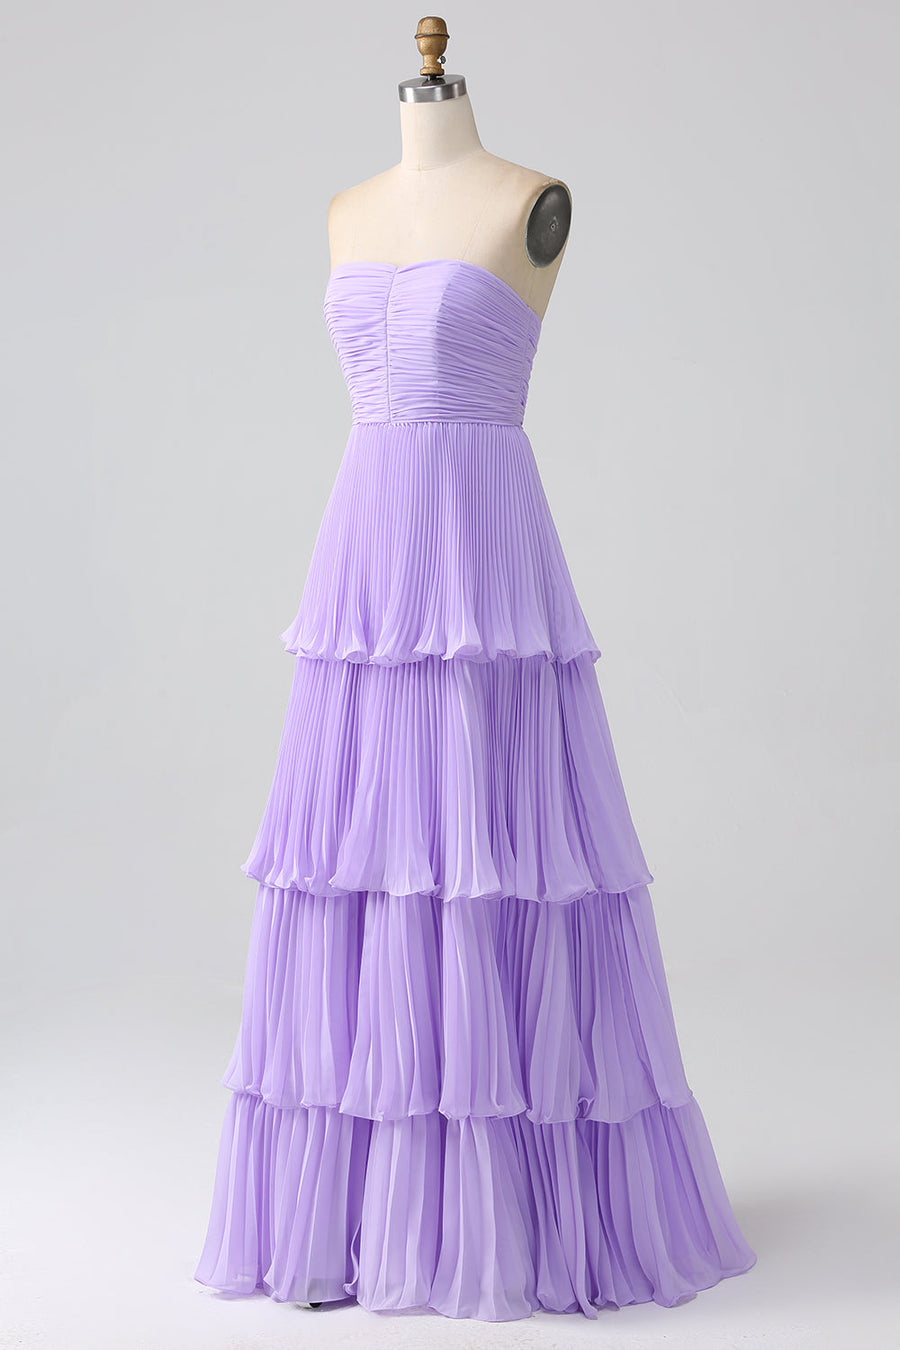 Strapless Multi-Layer Long Formal Dress in lavender